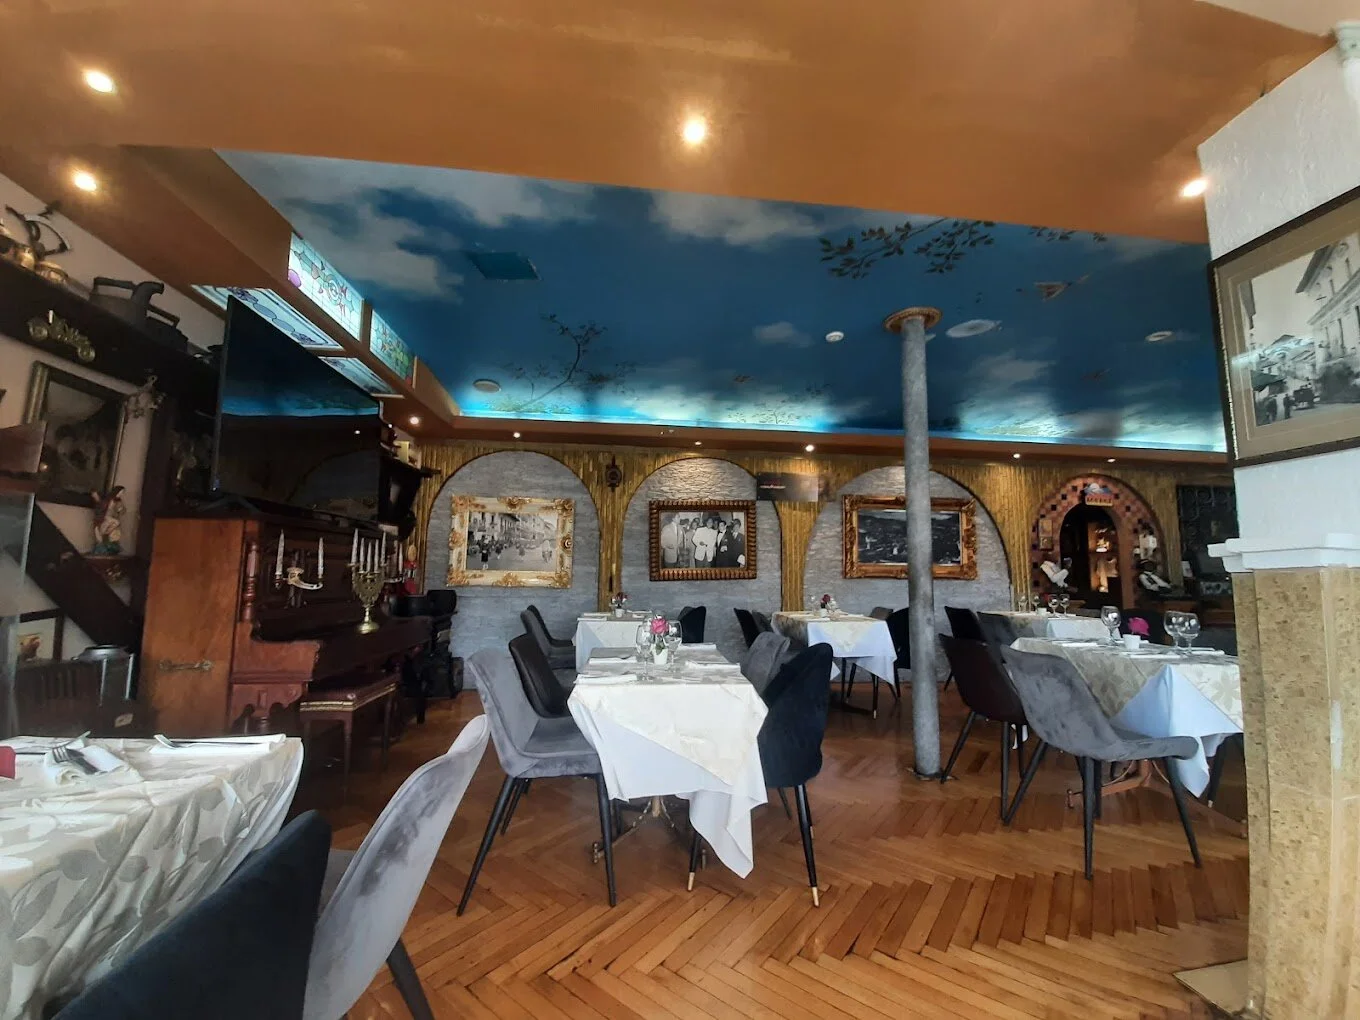 Restaurantes-vista-hermosa-centro-historico-17438